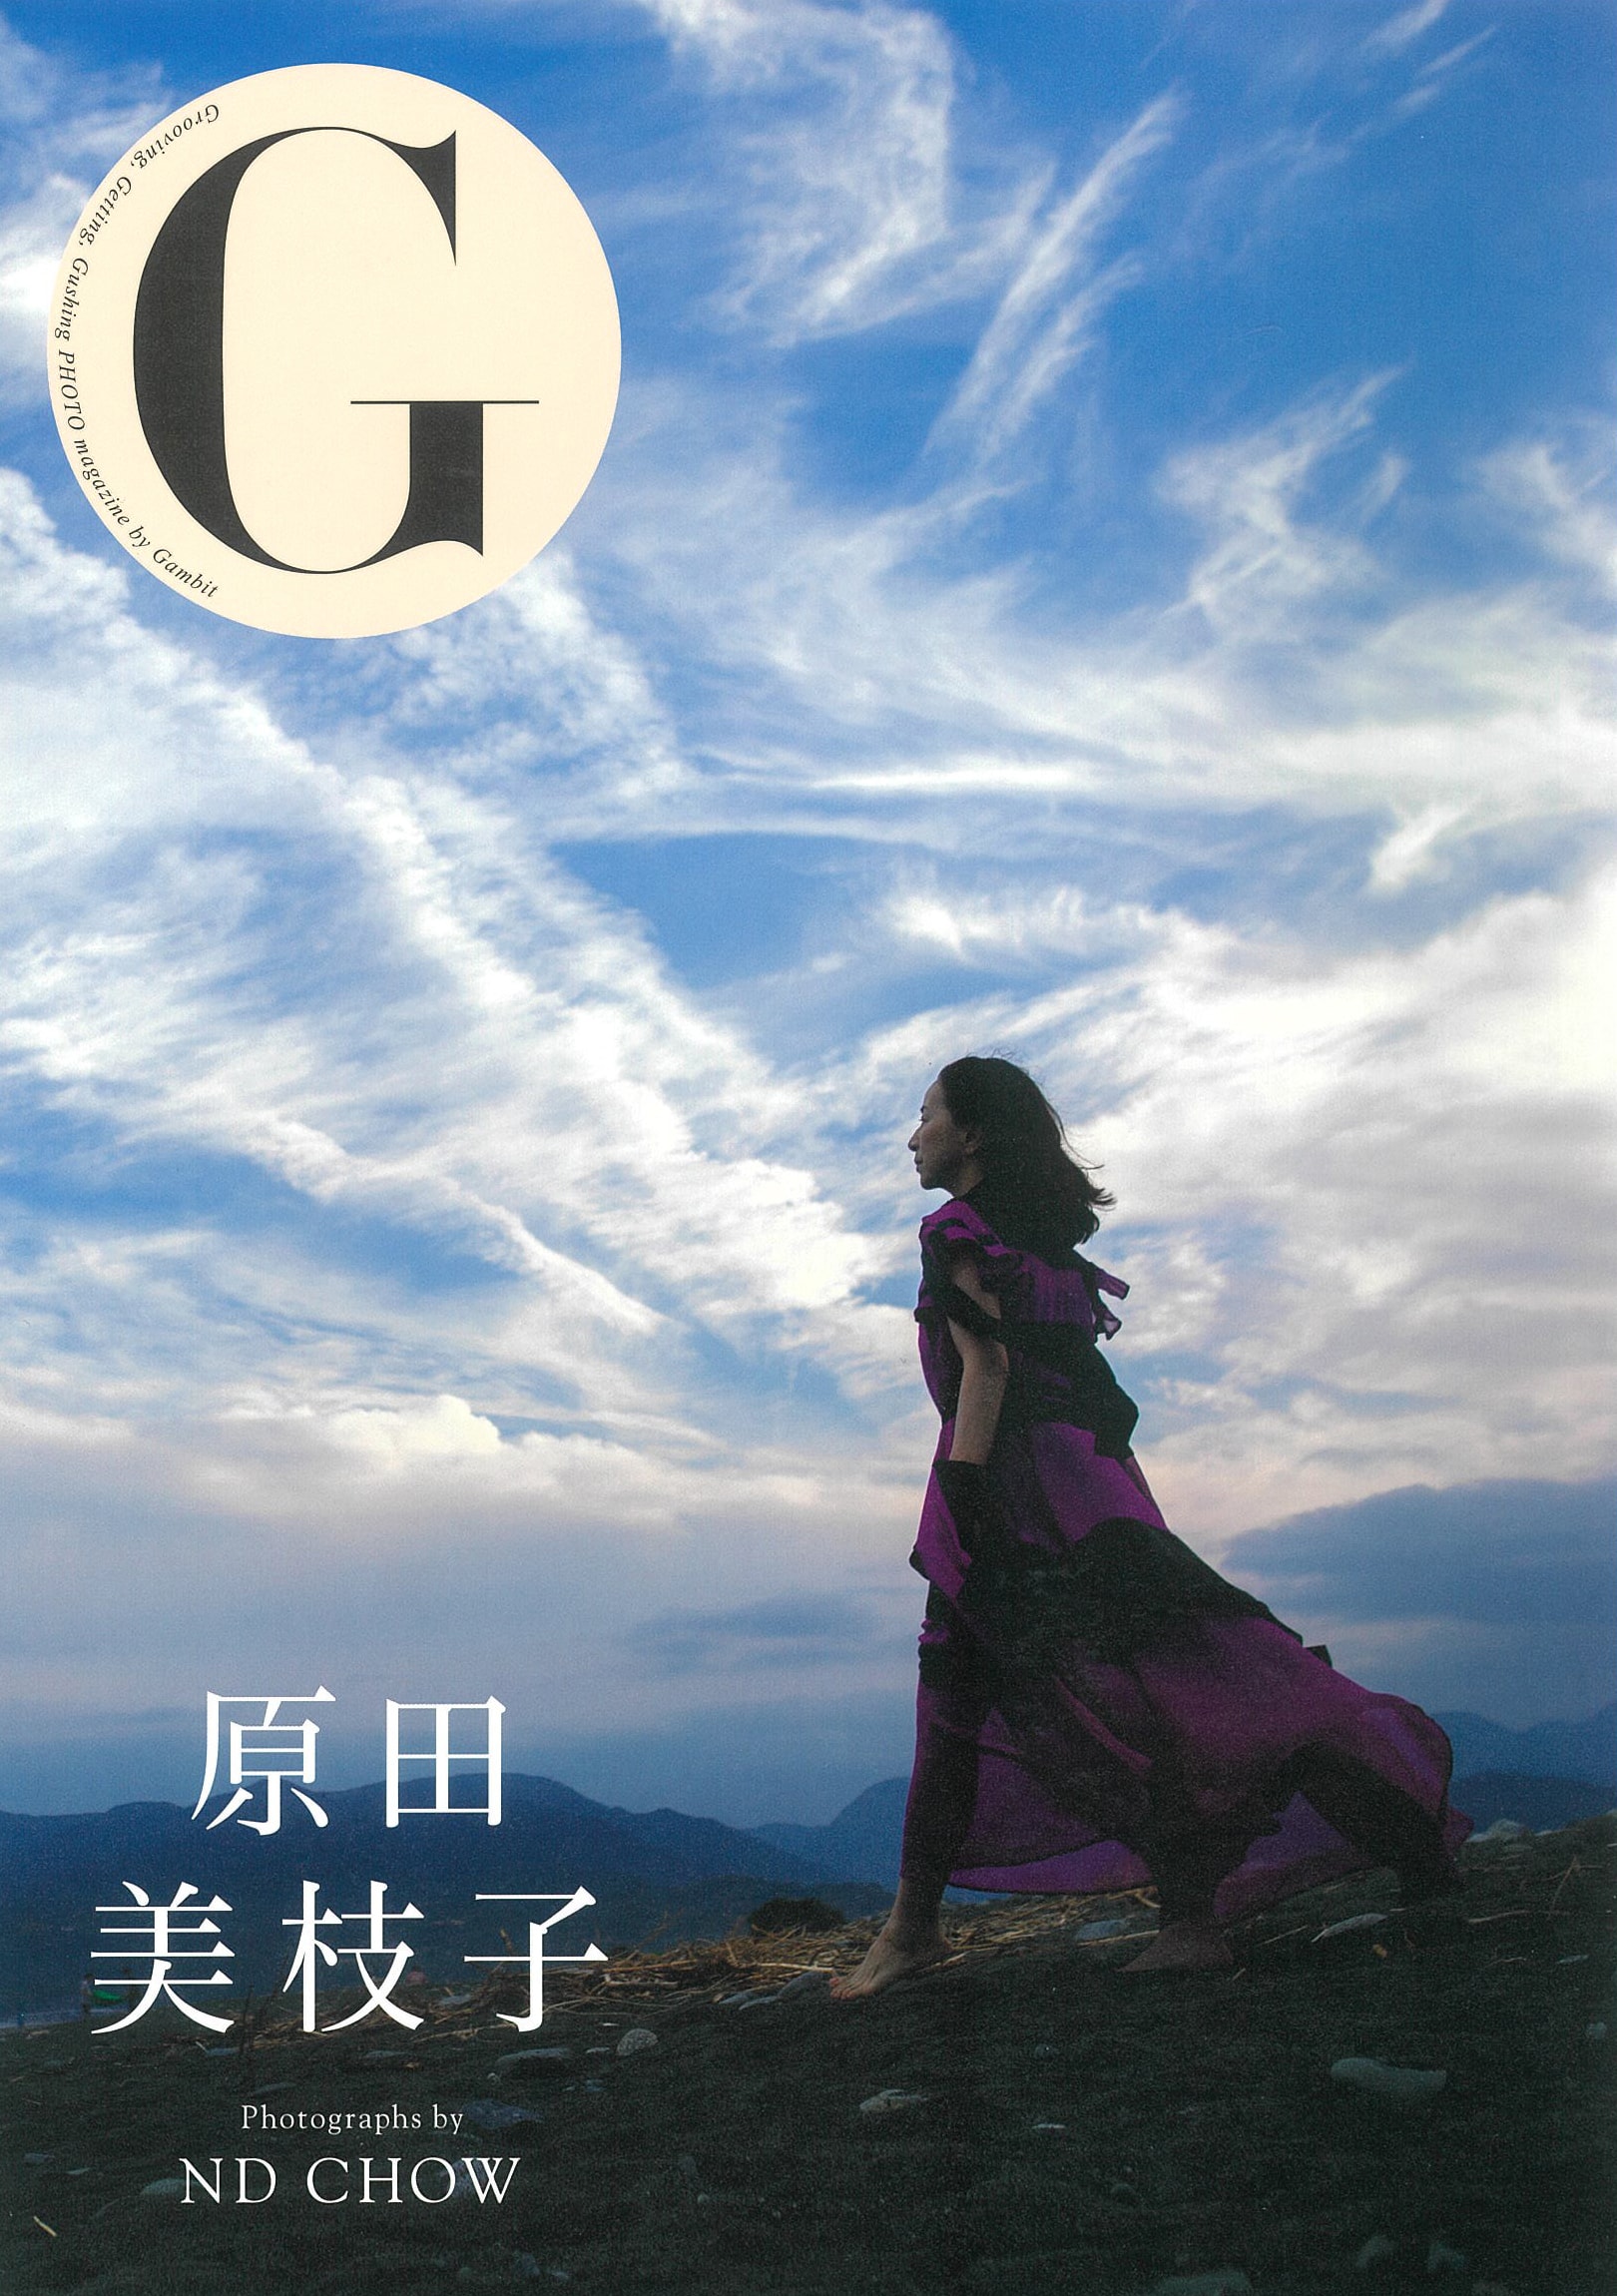 G Mieko Harada Assignment Nd Chow Photographer